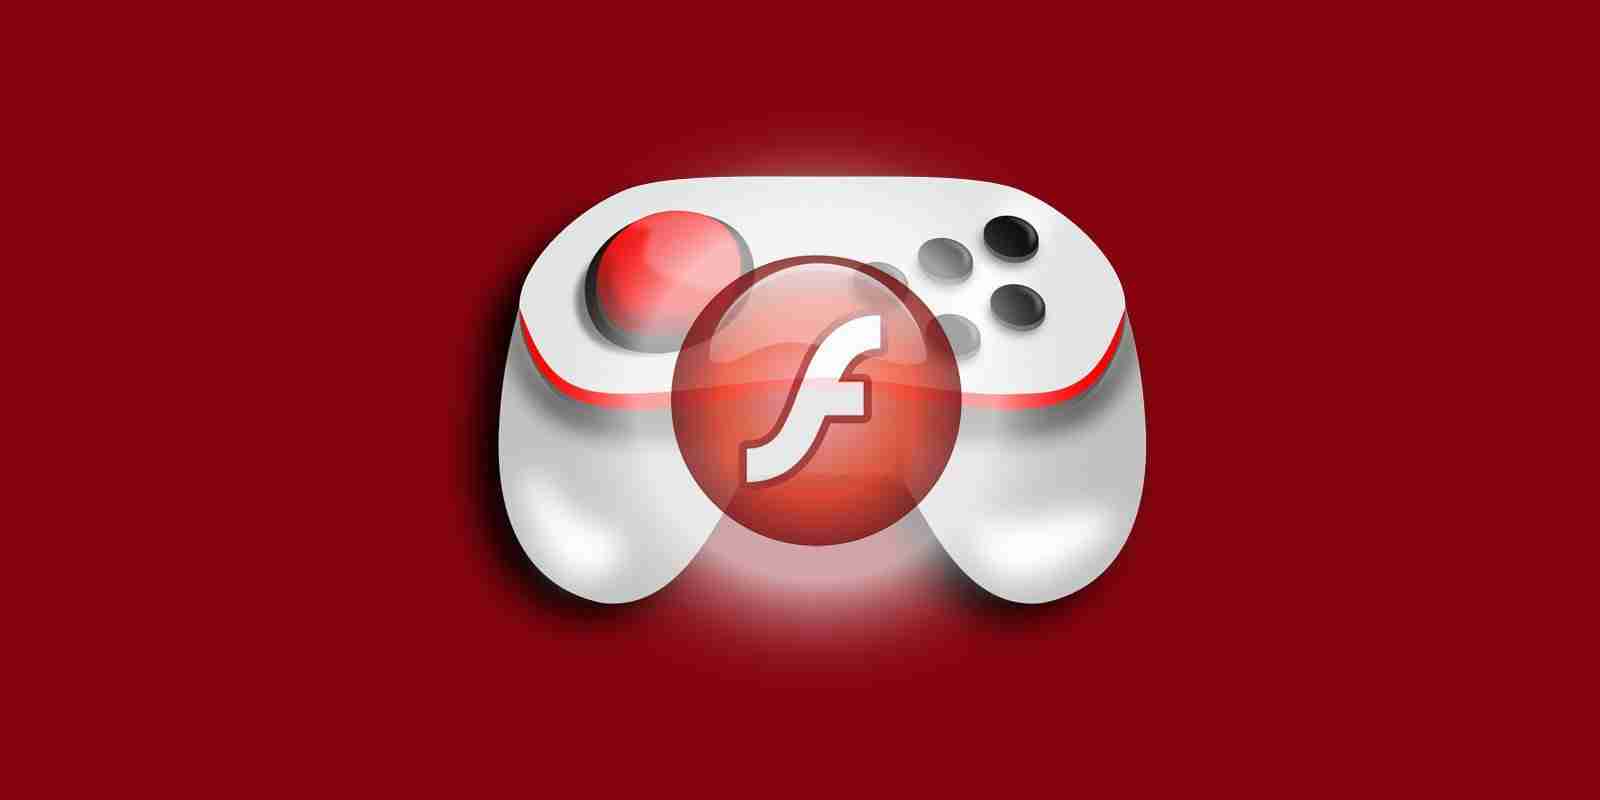 adobe flash player emulator